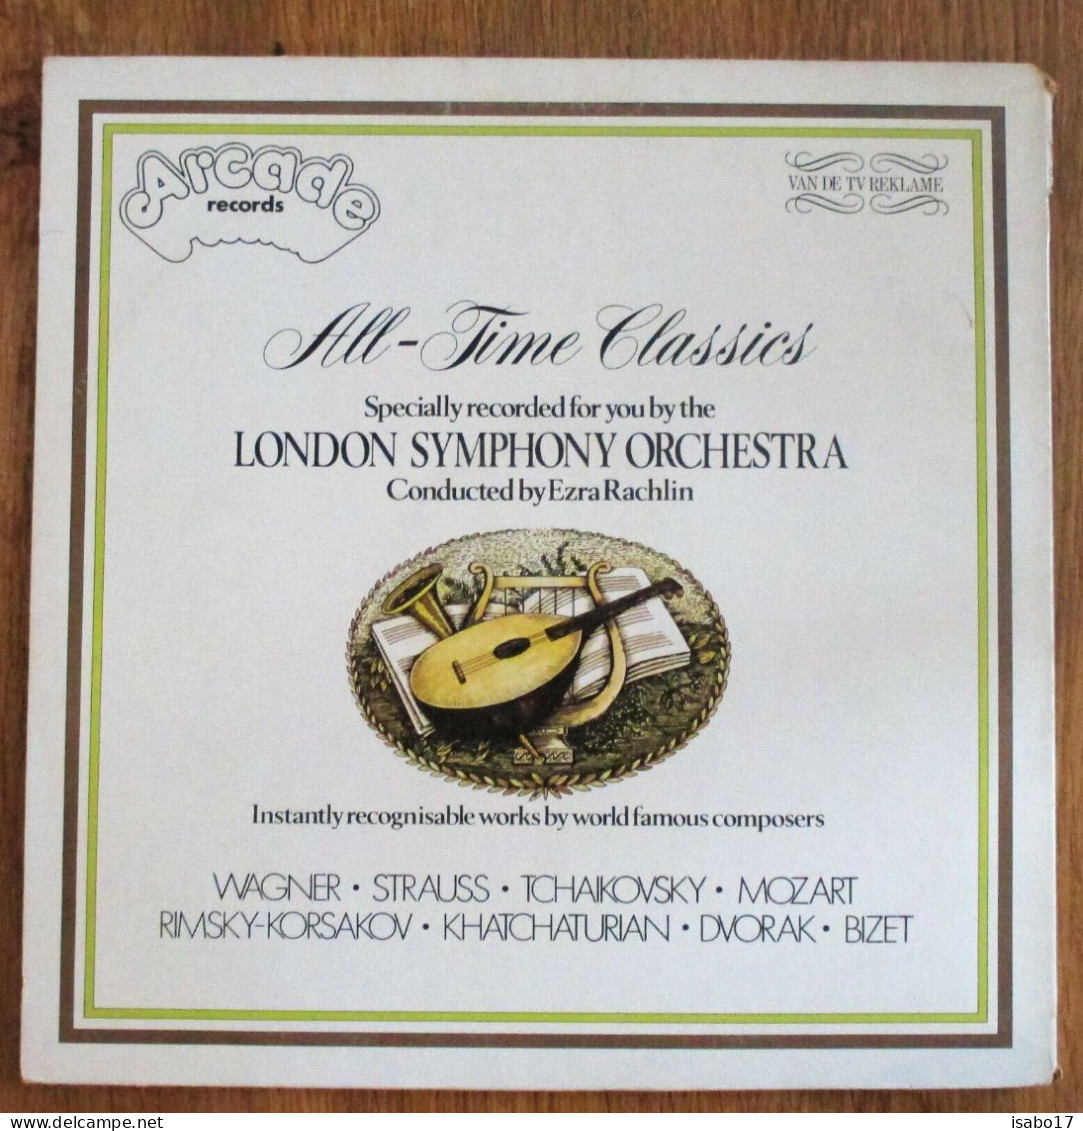 All-Time Classics [Vinyl LP] - Oper & Operette